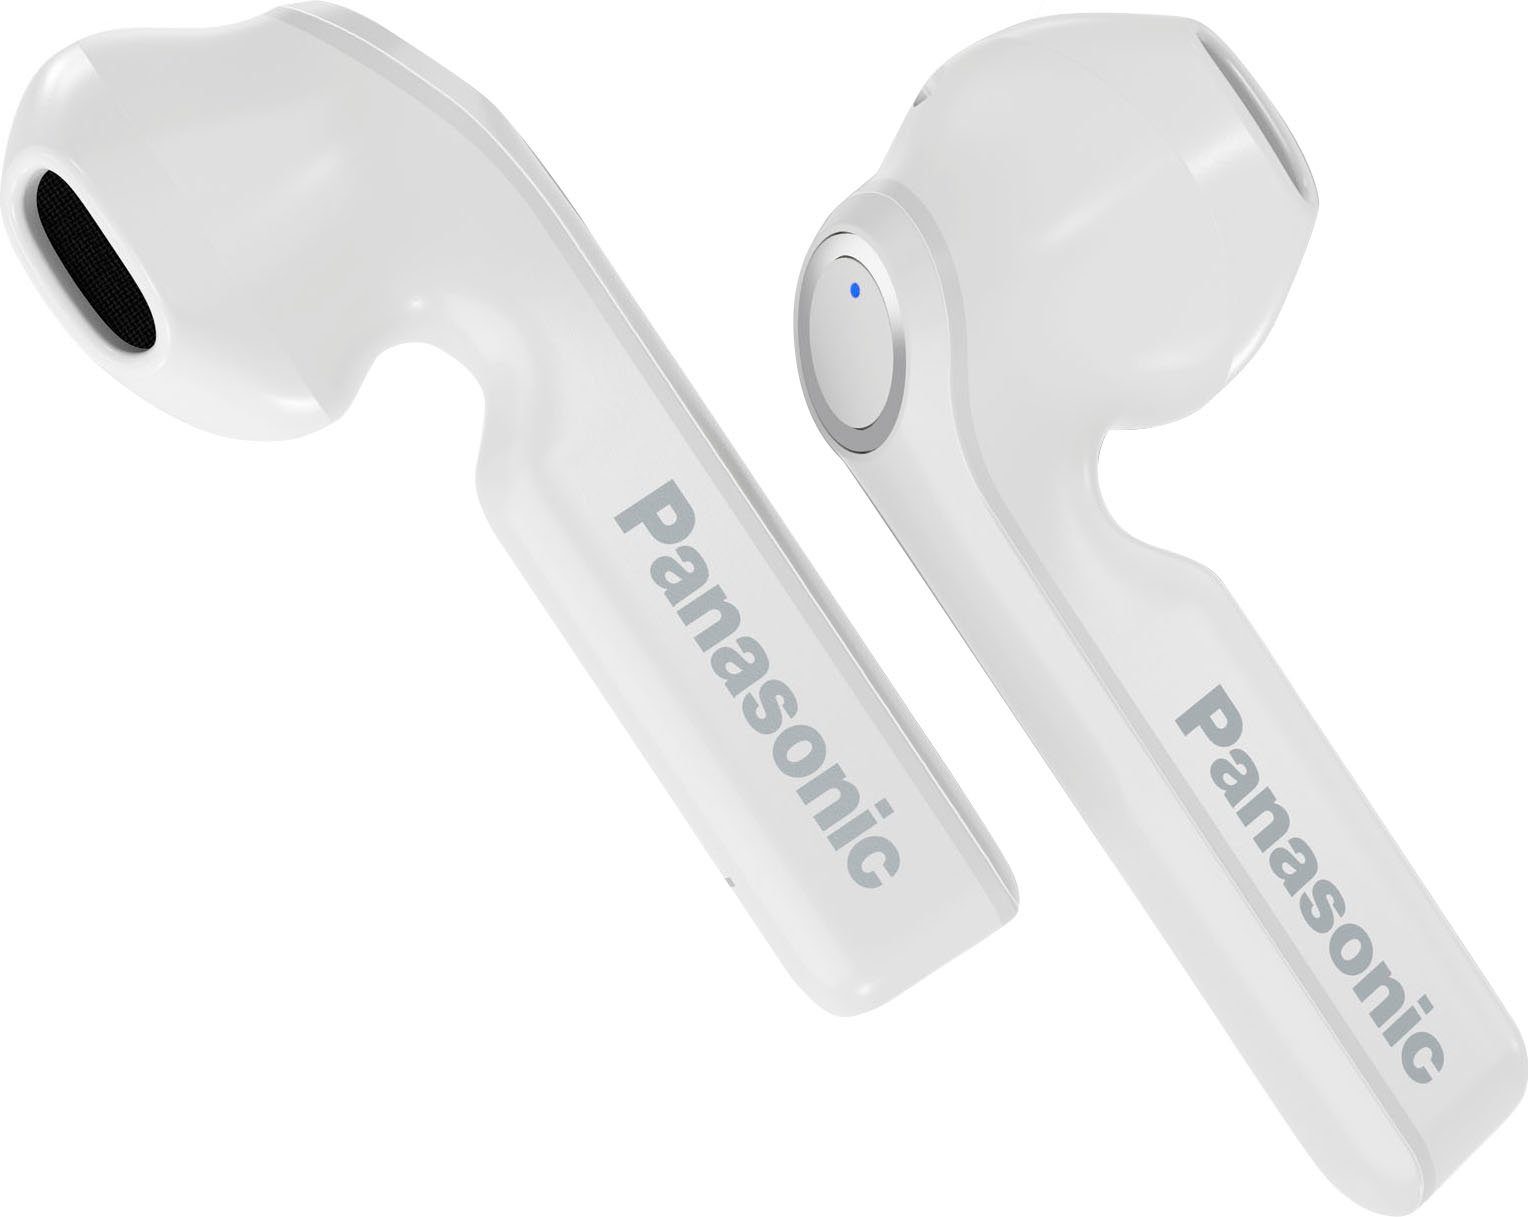 Panasonic RZ-B100 wireless In-Ear-Kopfhörer (Earbuds – (Sprachsteuerung, Wireless, 4h) Bluetooth), Akkulaufzeit Lade-Case Kompaktes insgesamt 16h Bietet True